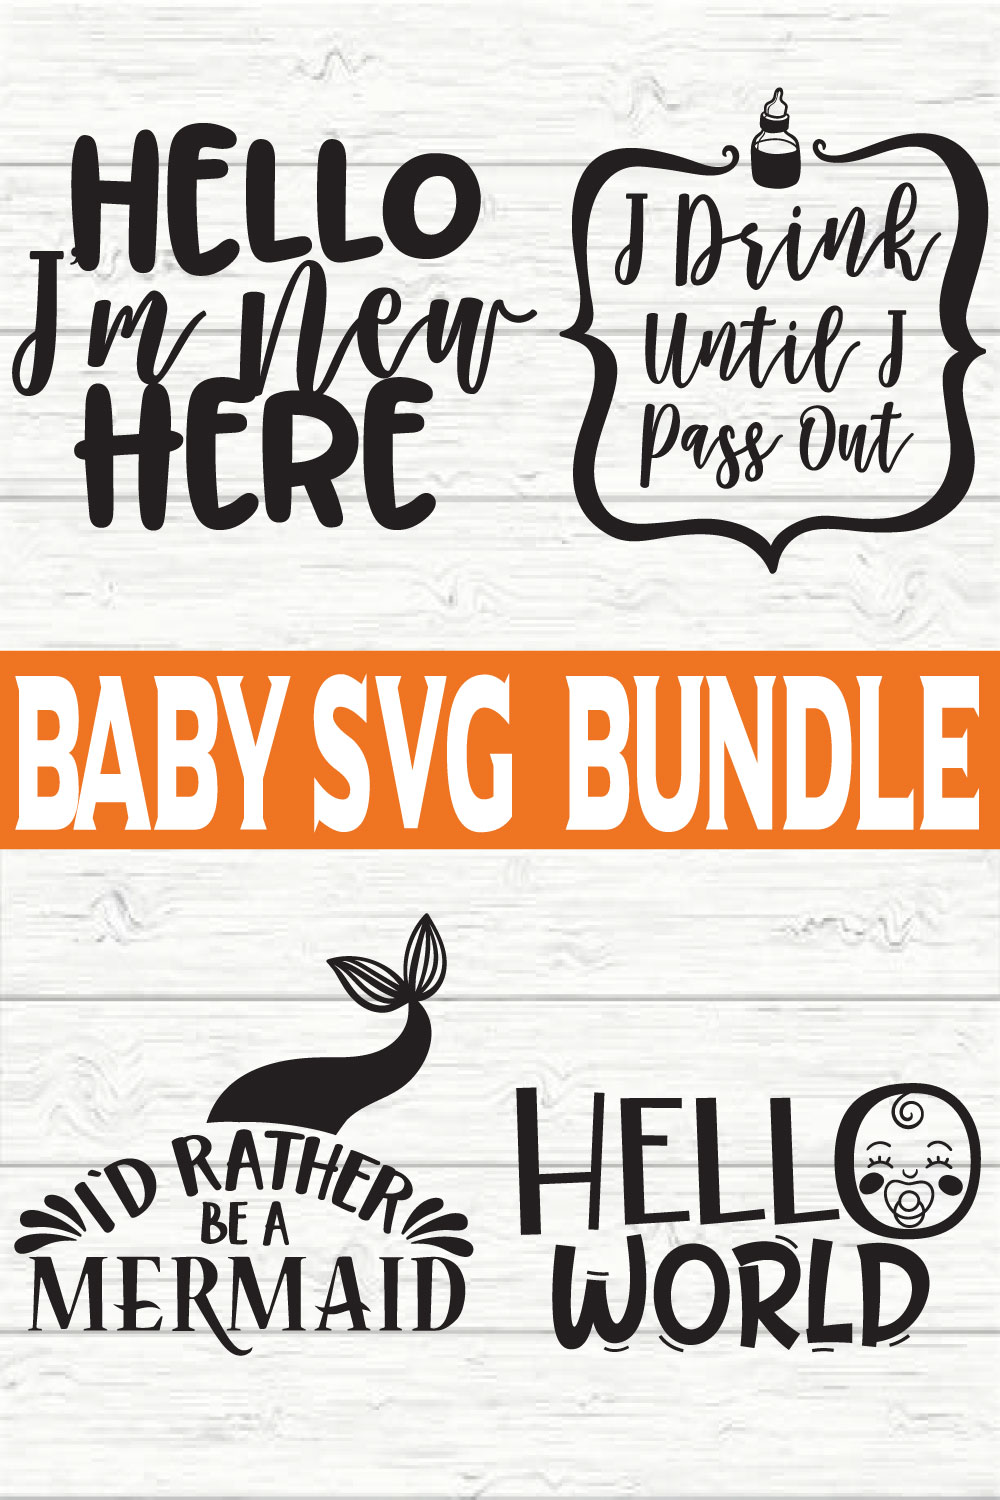 Baby Svg Bundle vol 2 pinterest preview image.